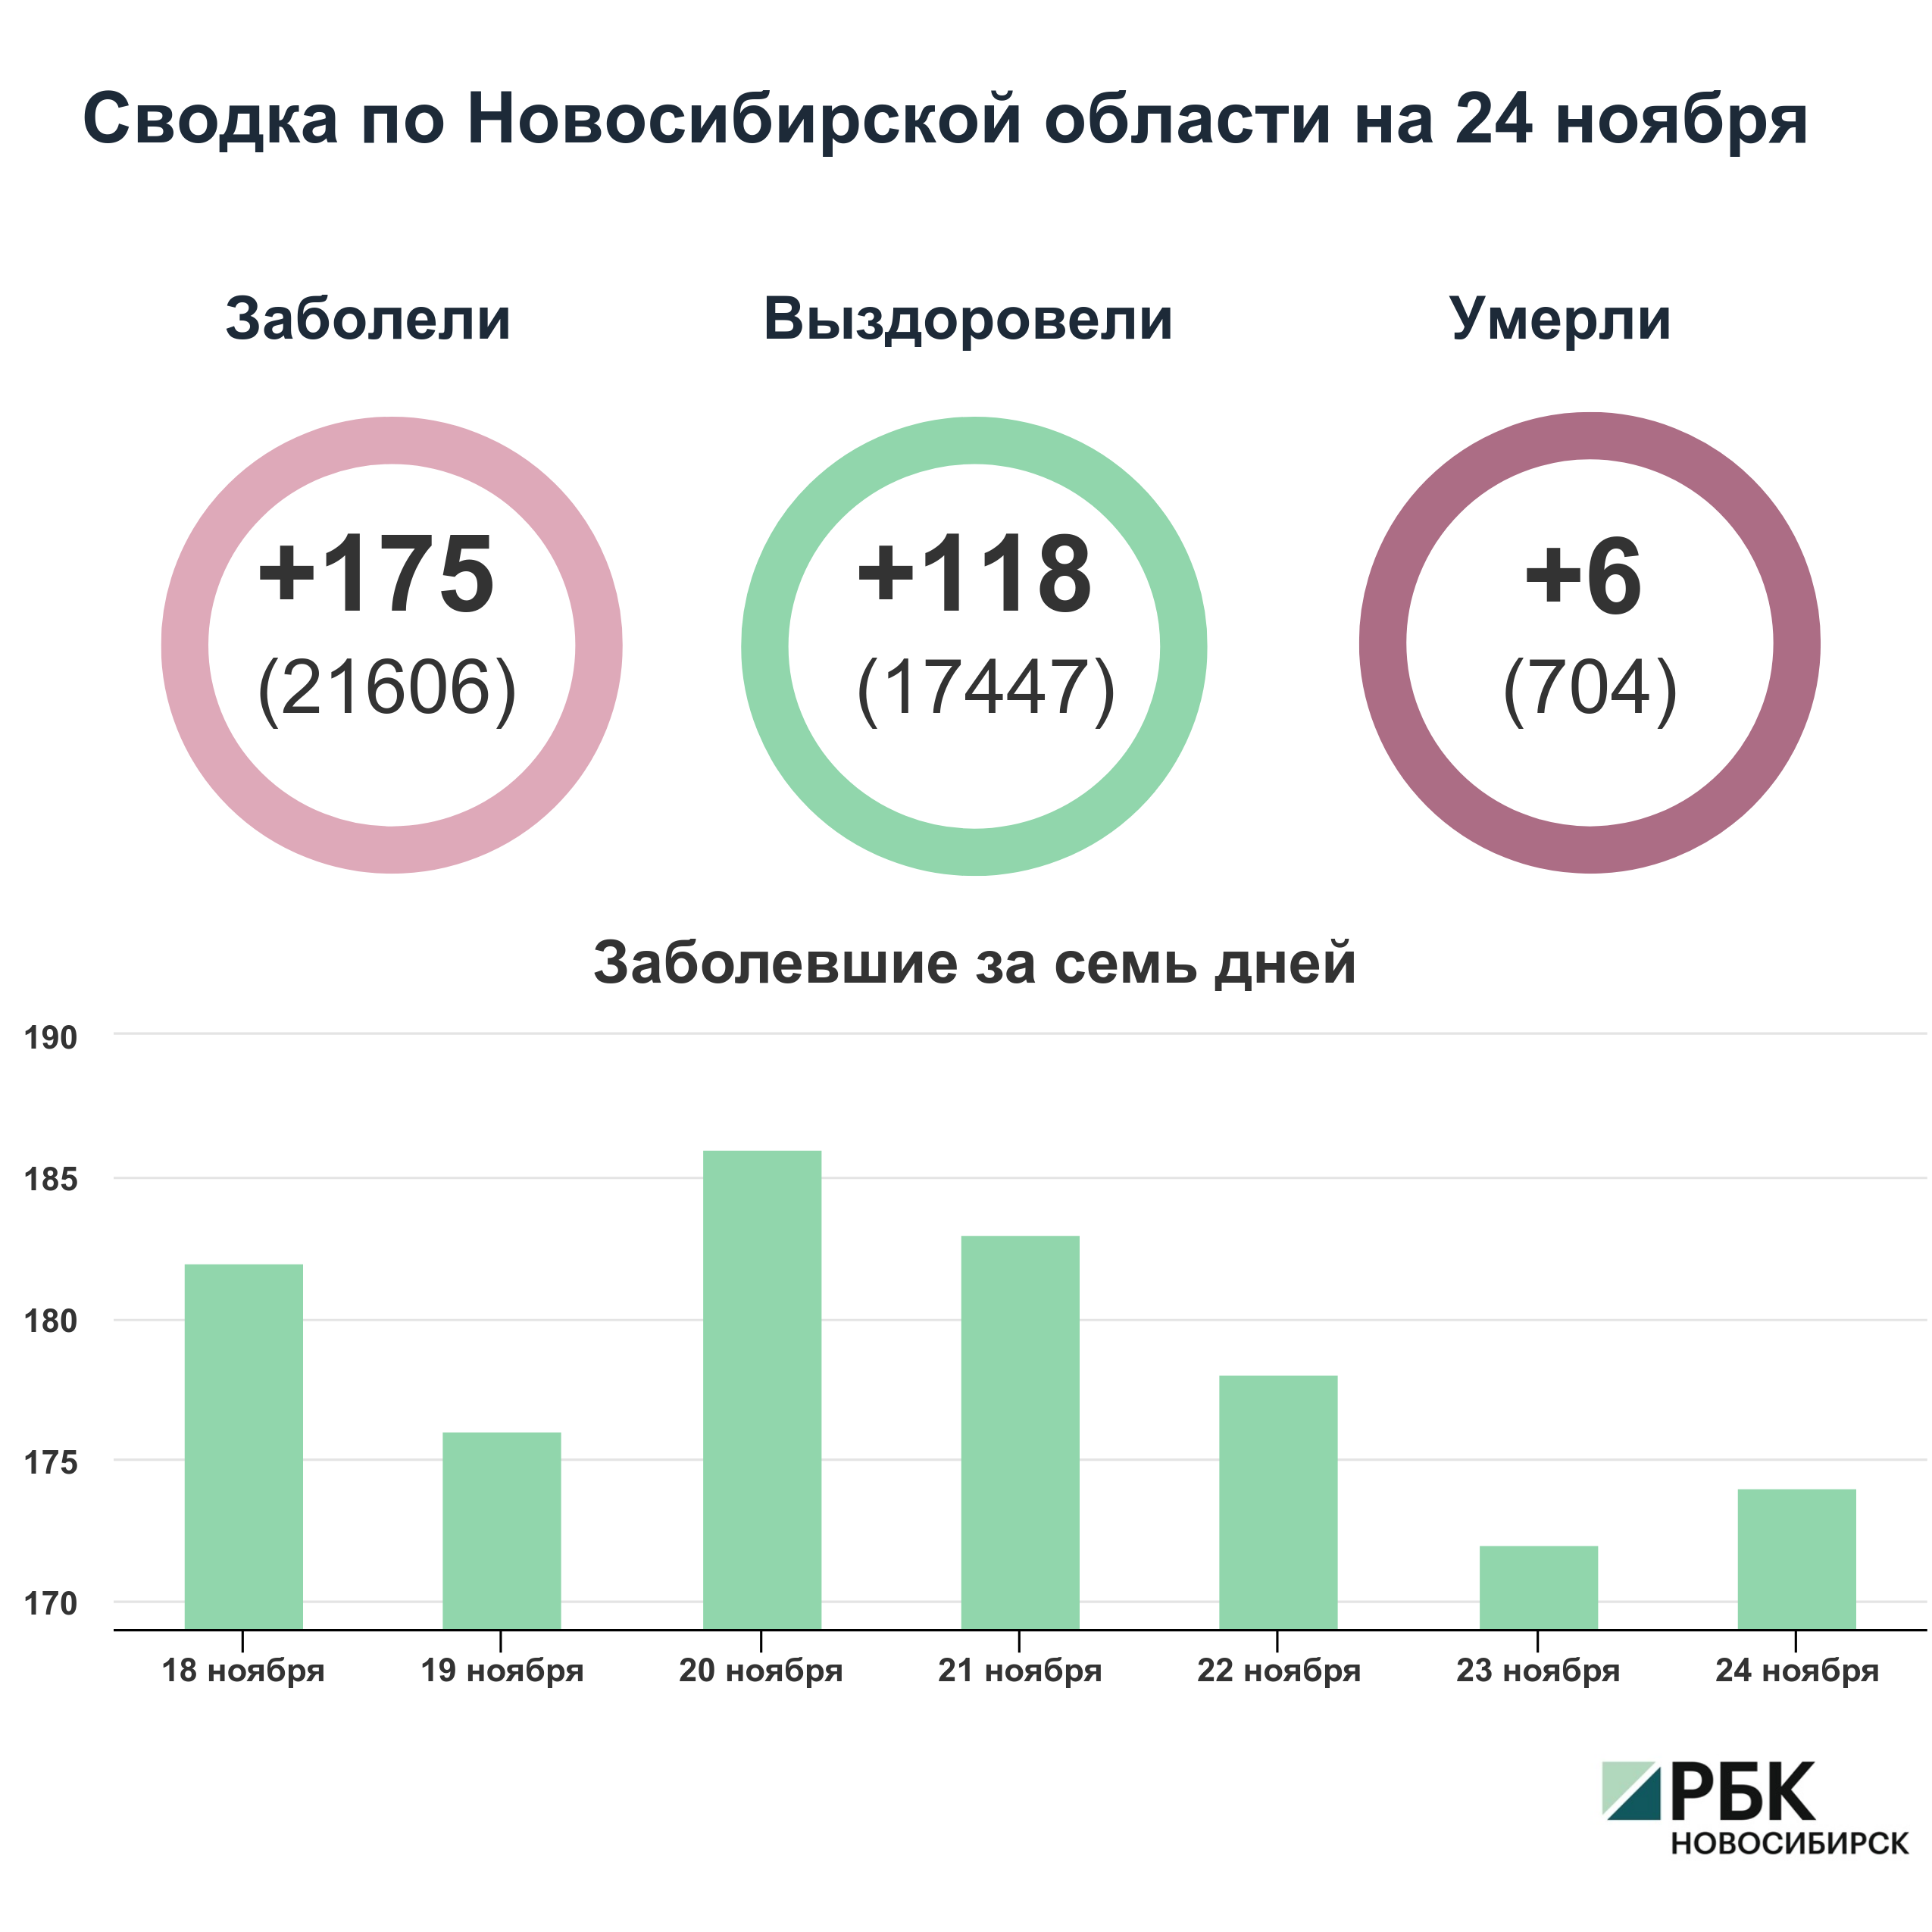 Коронавирус в Новосибирске: сводка на 24 ноября